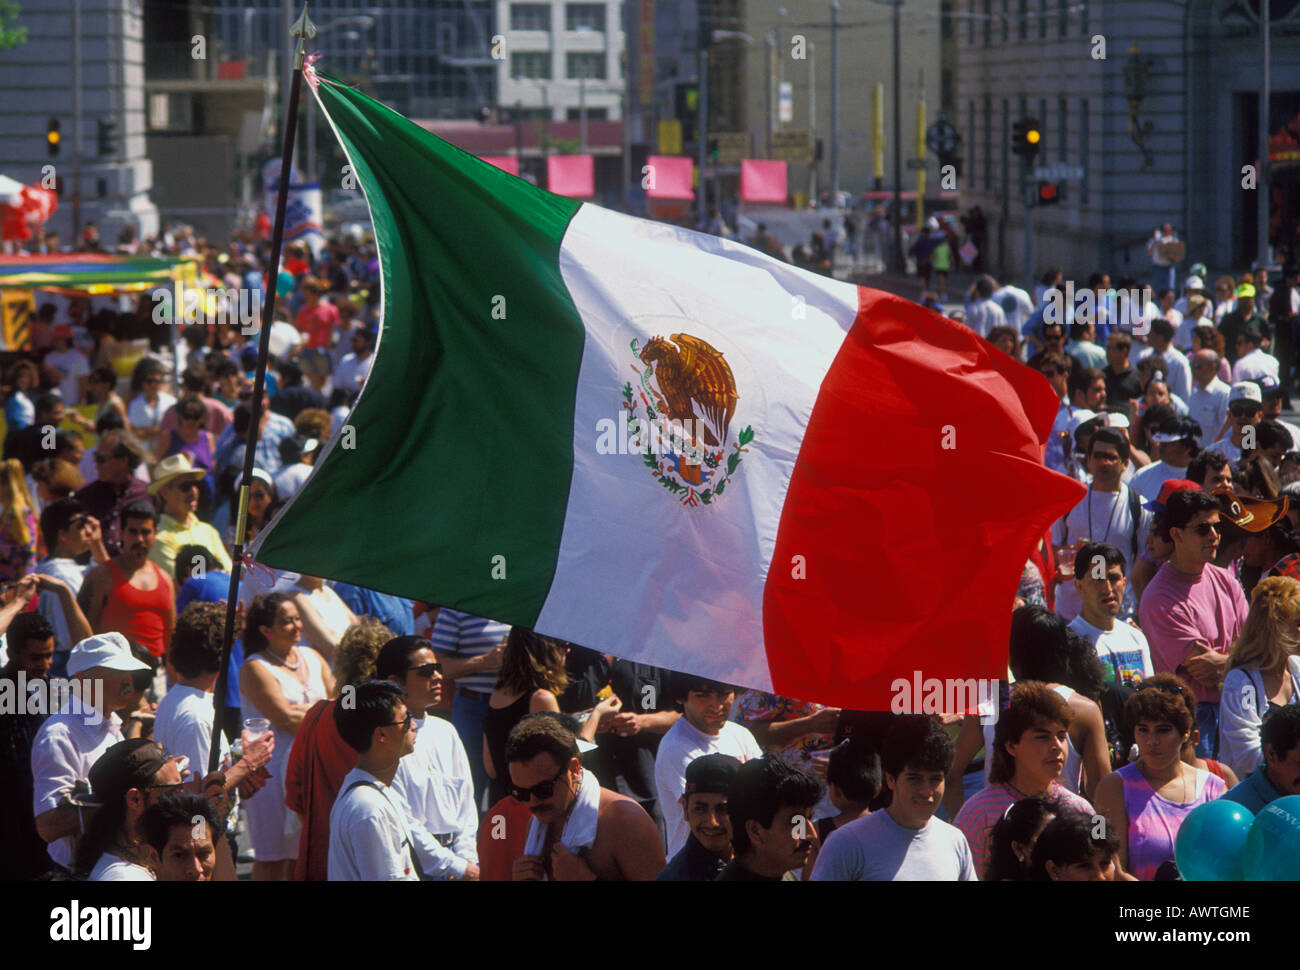 Die Leute winken mexikanische Flagge, mexikanische Flagge, Cinco de Mayo Festival, Civic Center Plaza, San Francisco, Kalifornien, USA, Nordamerika Stockfoto